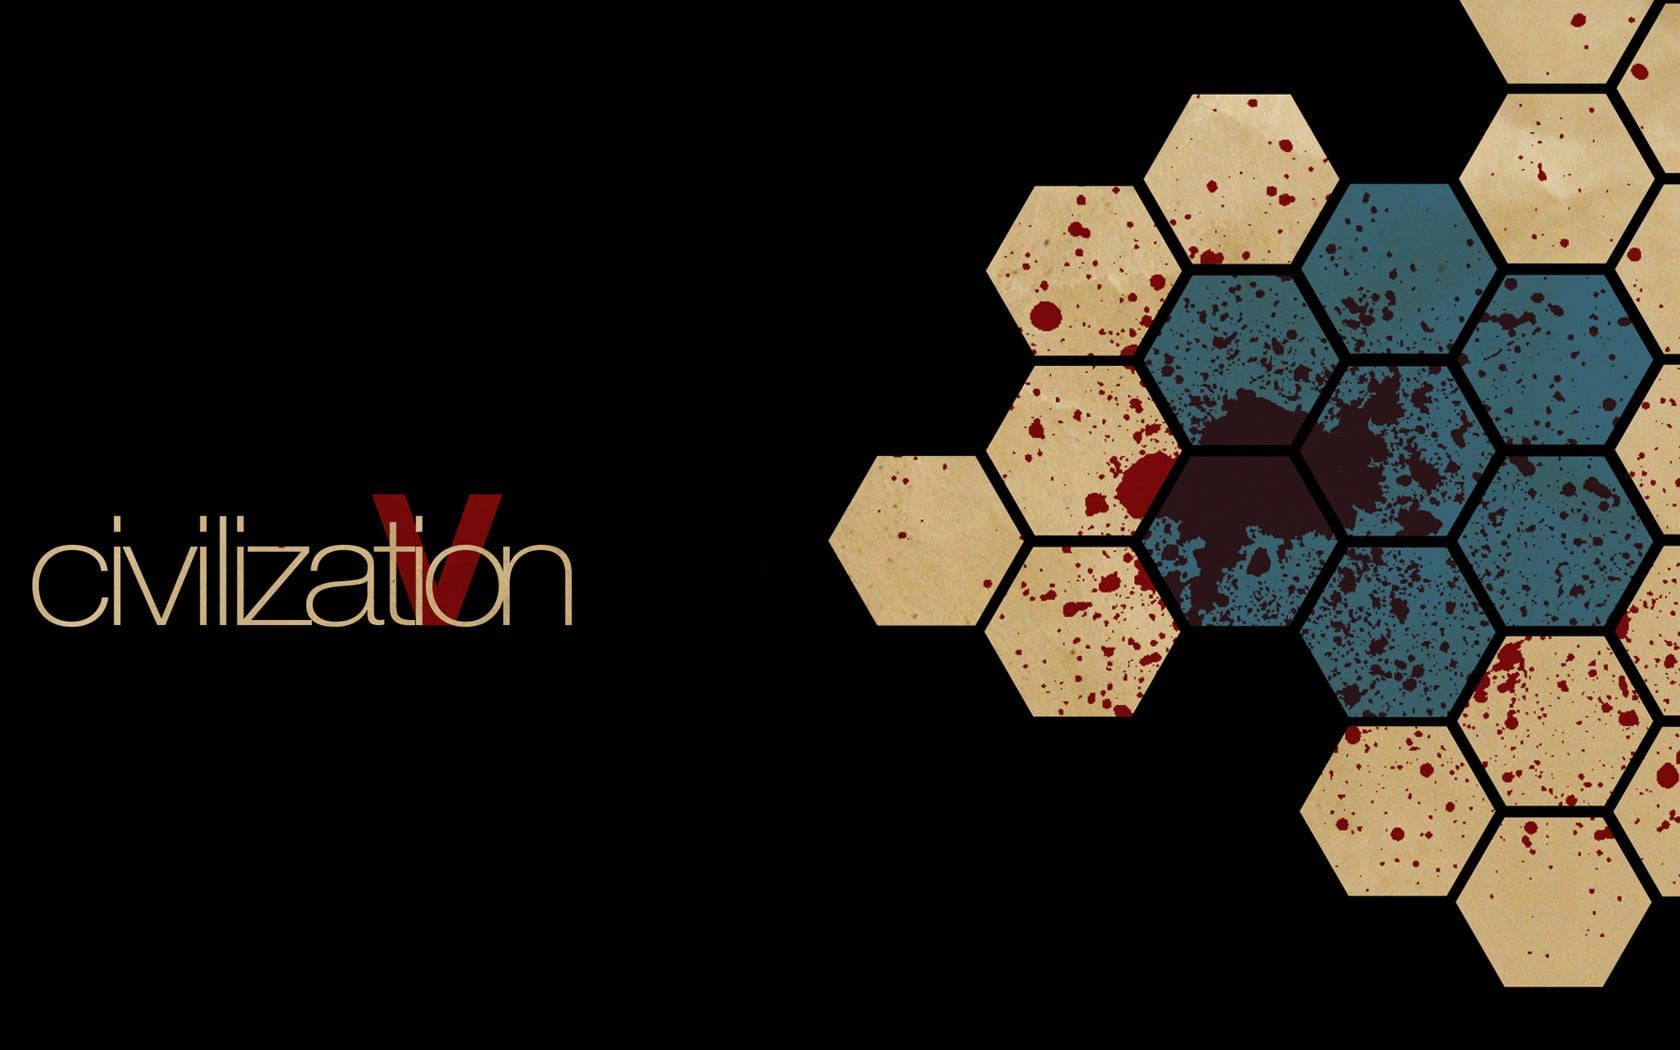 Bloody Hexagon Civilization 5 Wallpaper